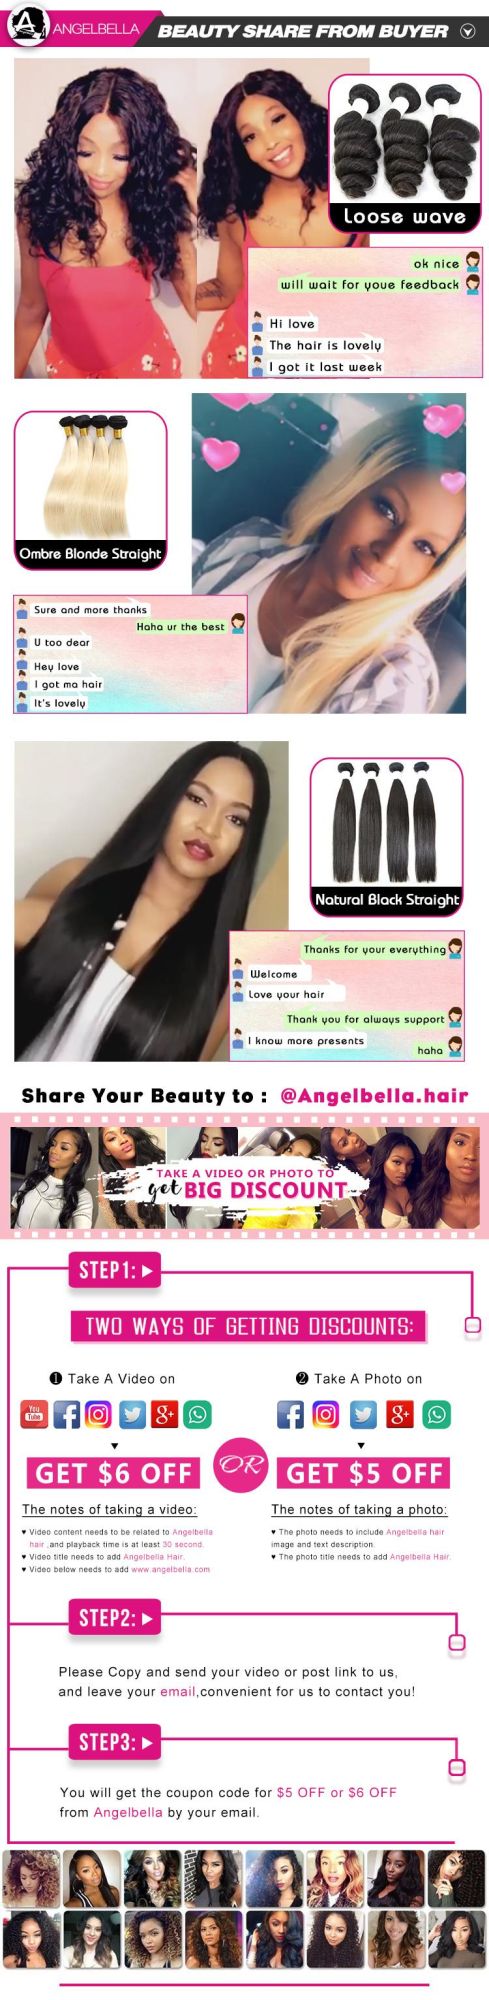 Angelbella Raw Mink Brazilian Hair Closure 5X5 Swiss Lace Closure on Sales